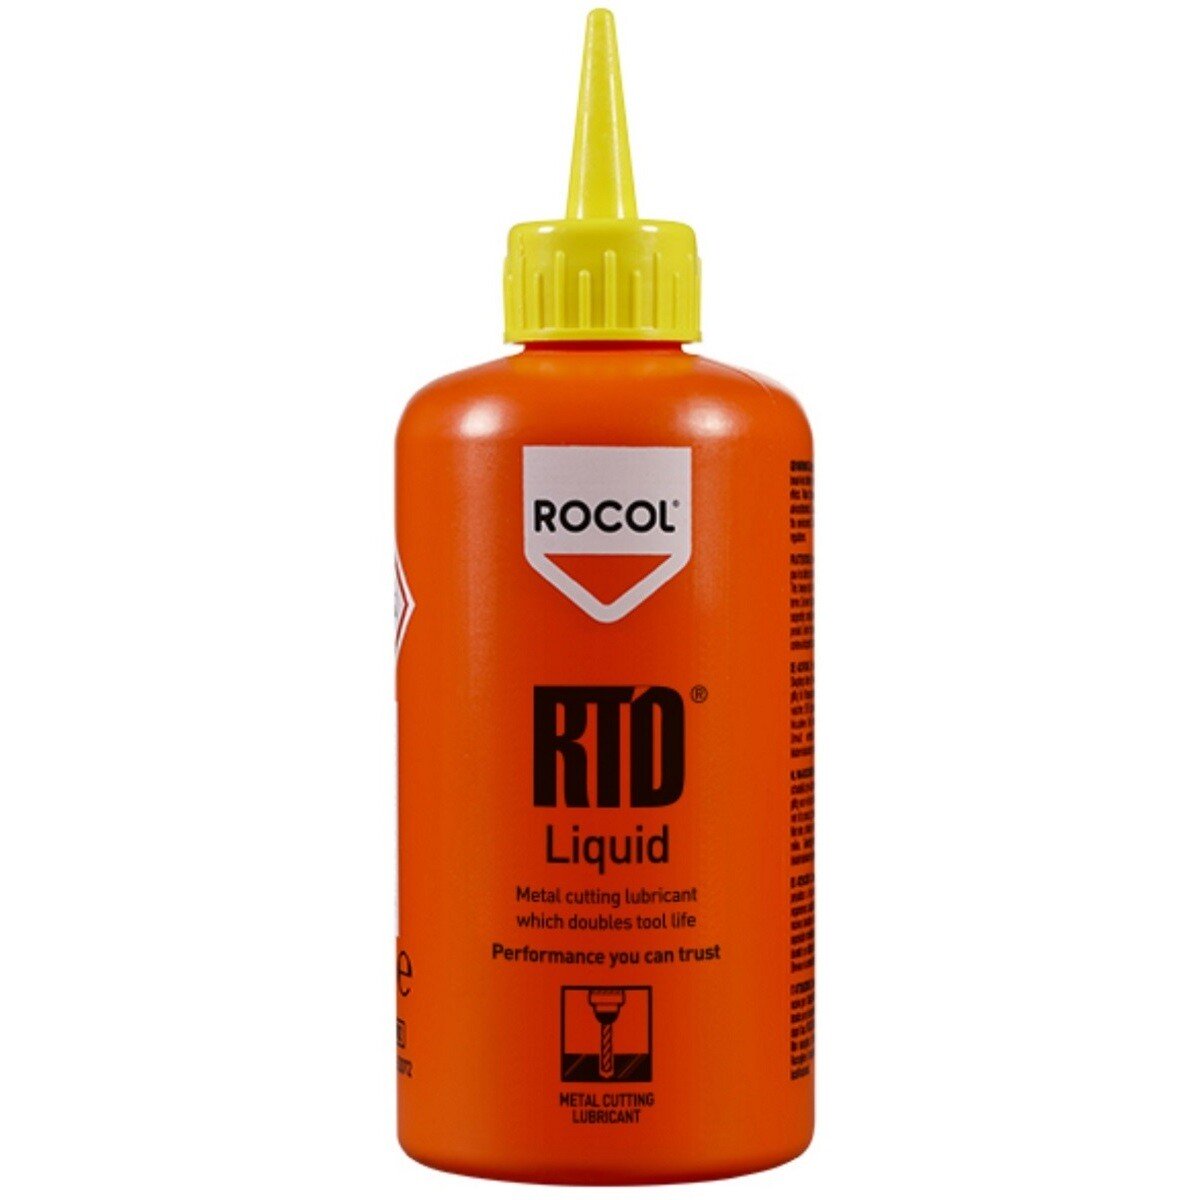 Rocol 53072 RTD Liquid - Metal Cutting Liquid Which Doubles Tool Life 400gr